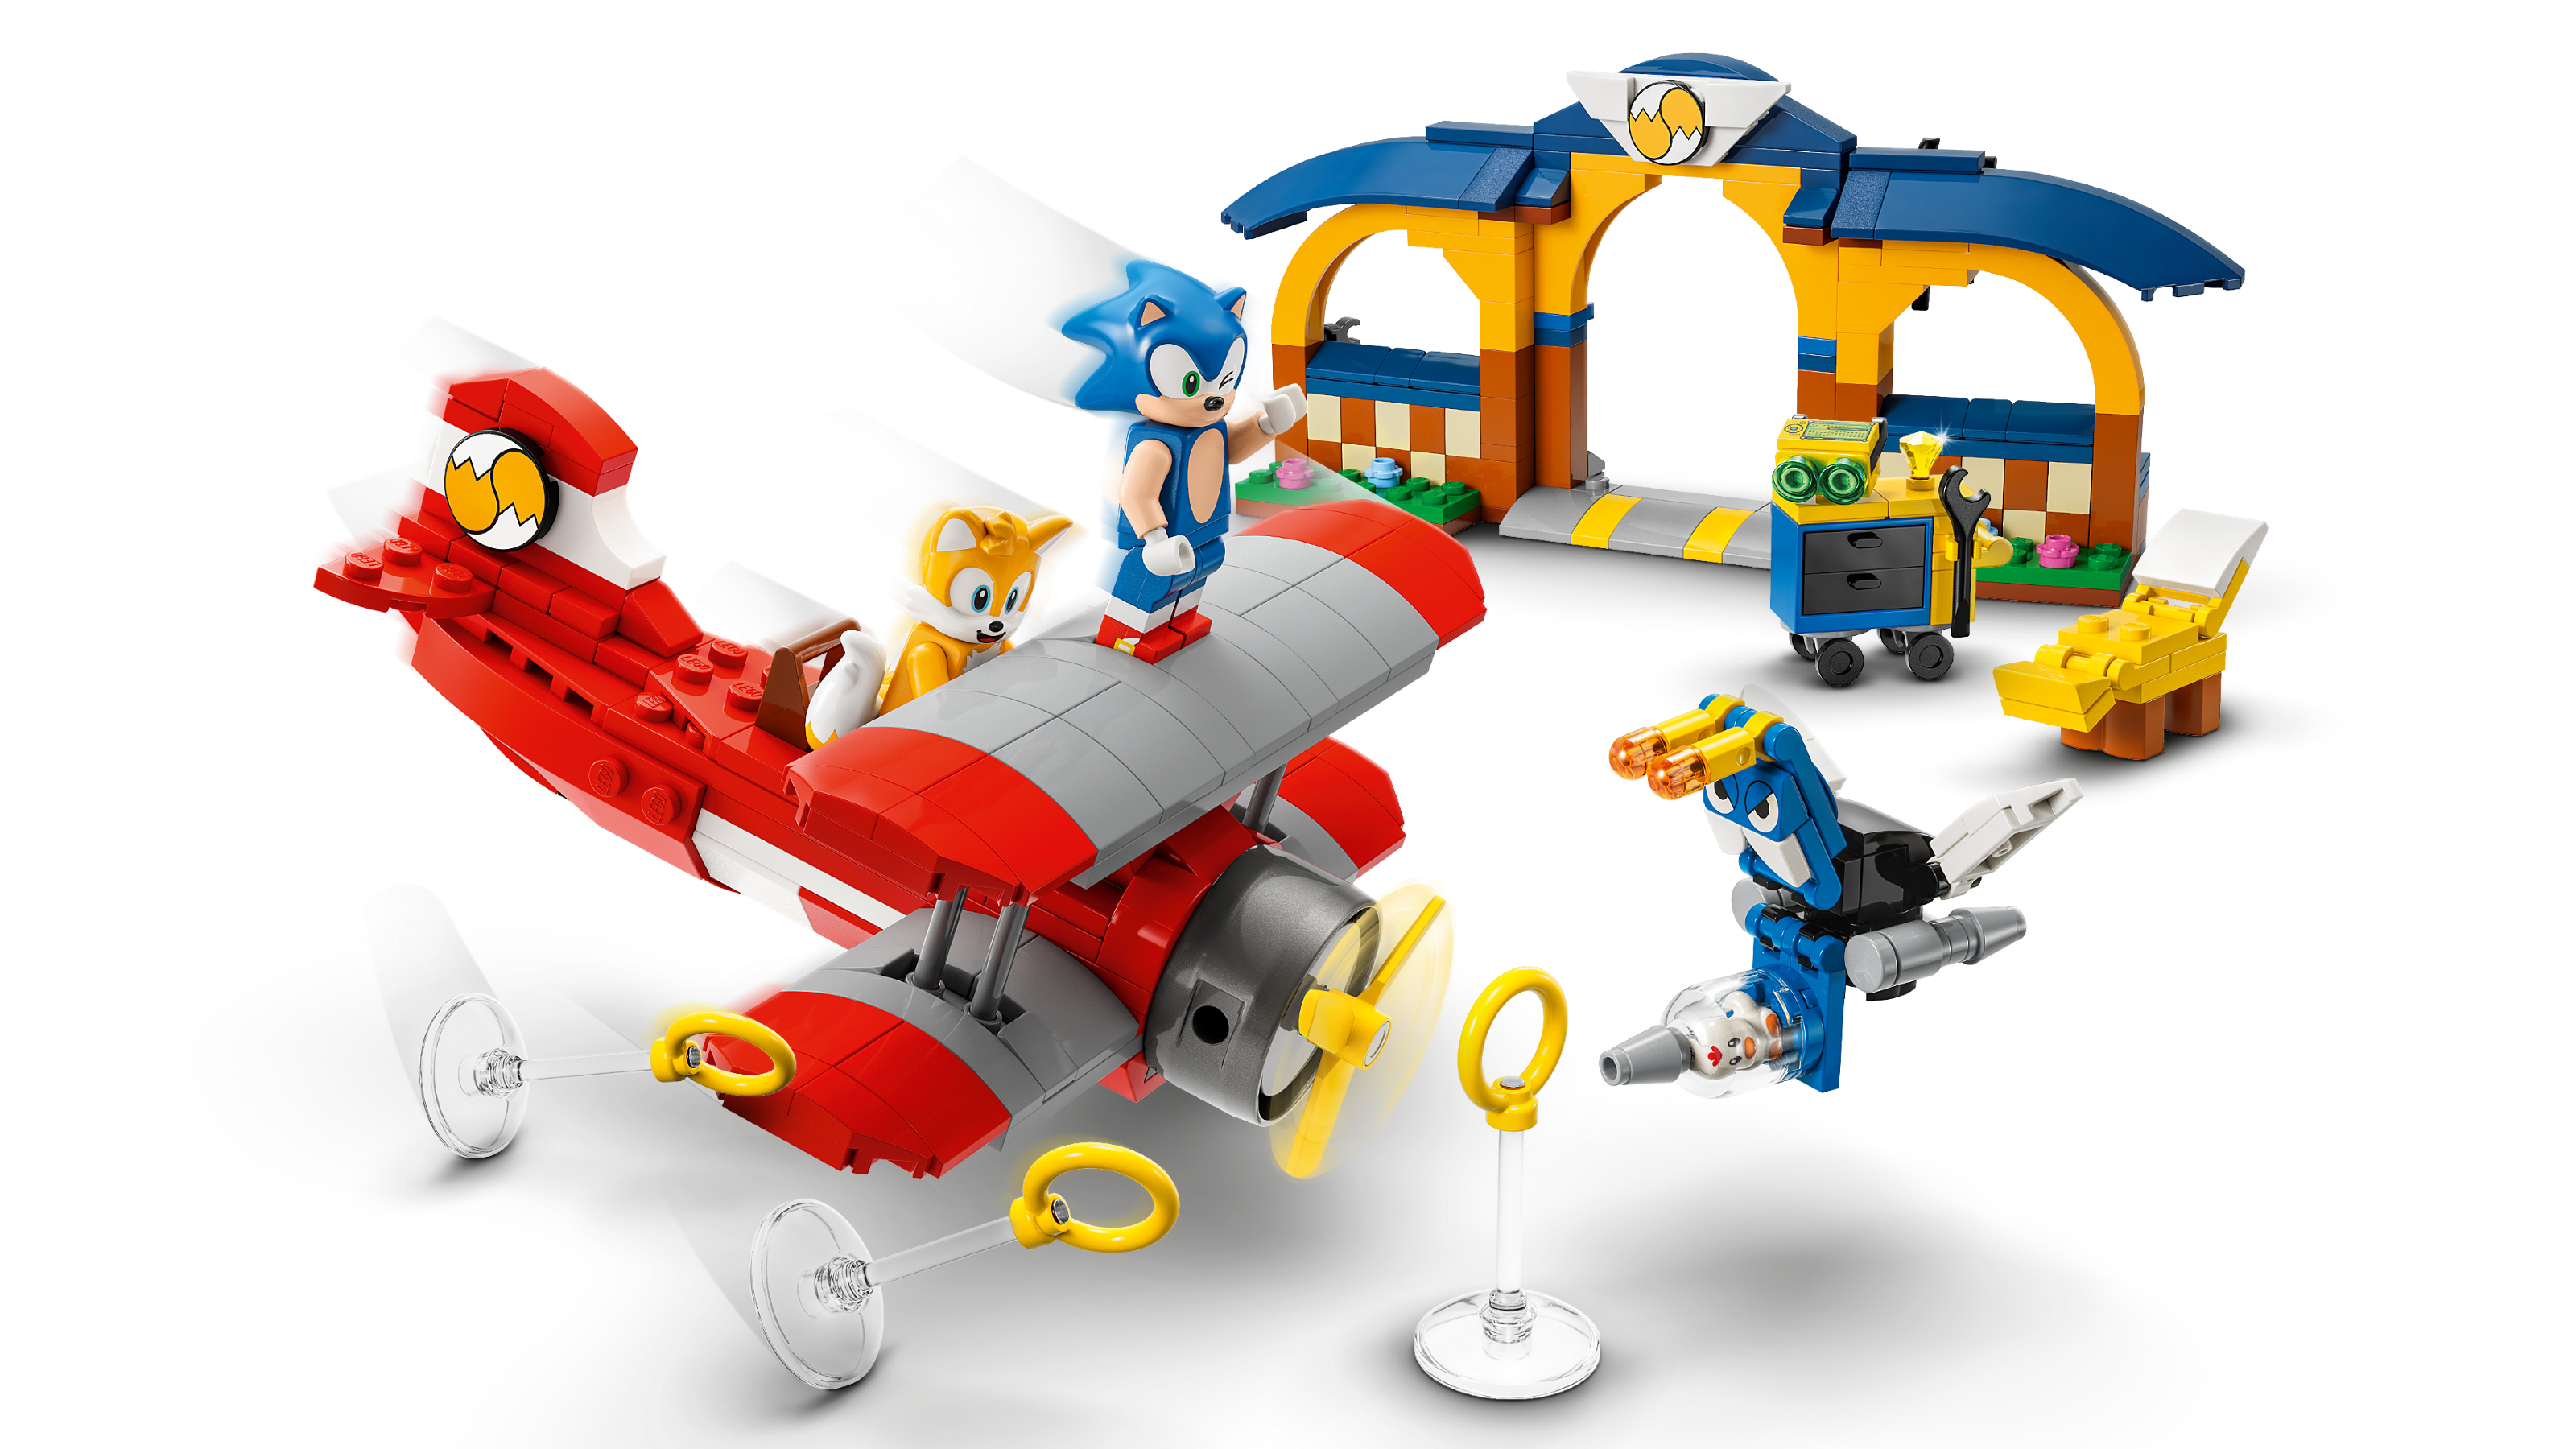 LEGO Sonic The Hedgehog Tails' Workshop and Tornado Plane Set 76991 - US